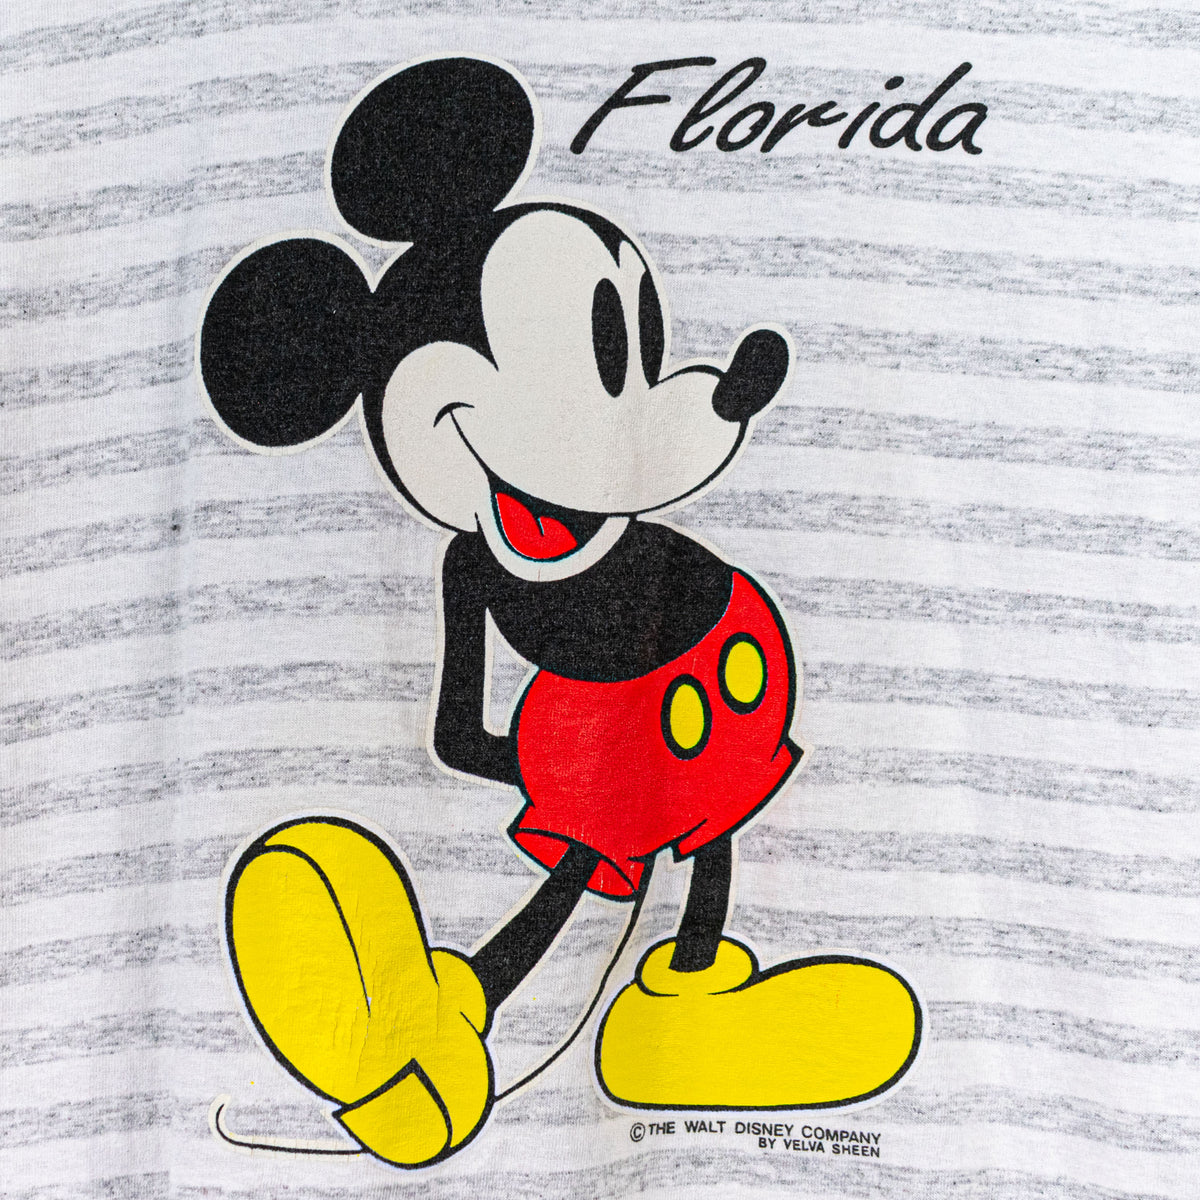 NHL New York Rangers Mickey Mouse Disney Hockey T Shirt Sweatshirt